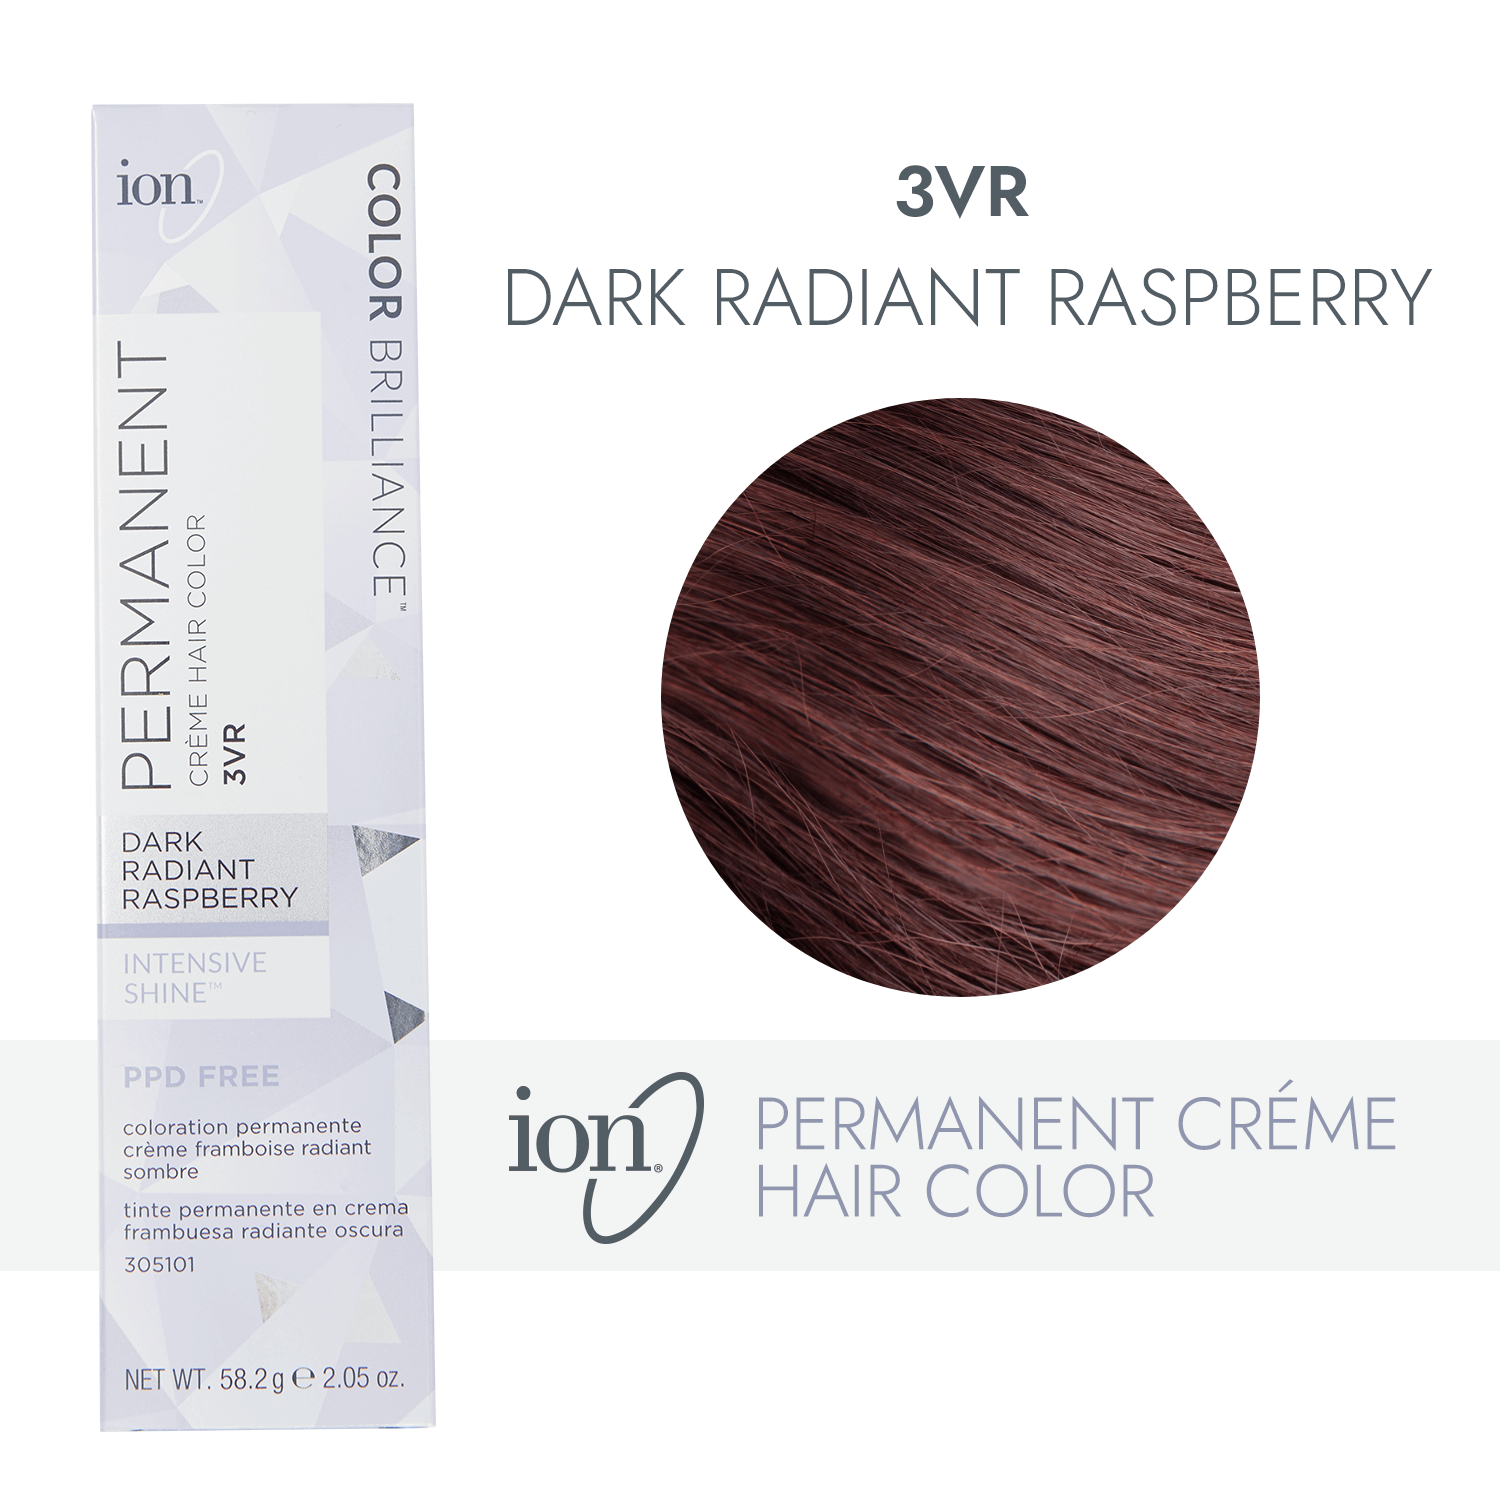 dark radiant raspberry ion